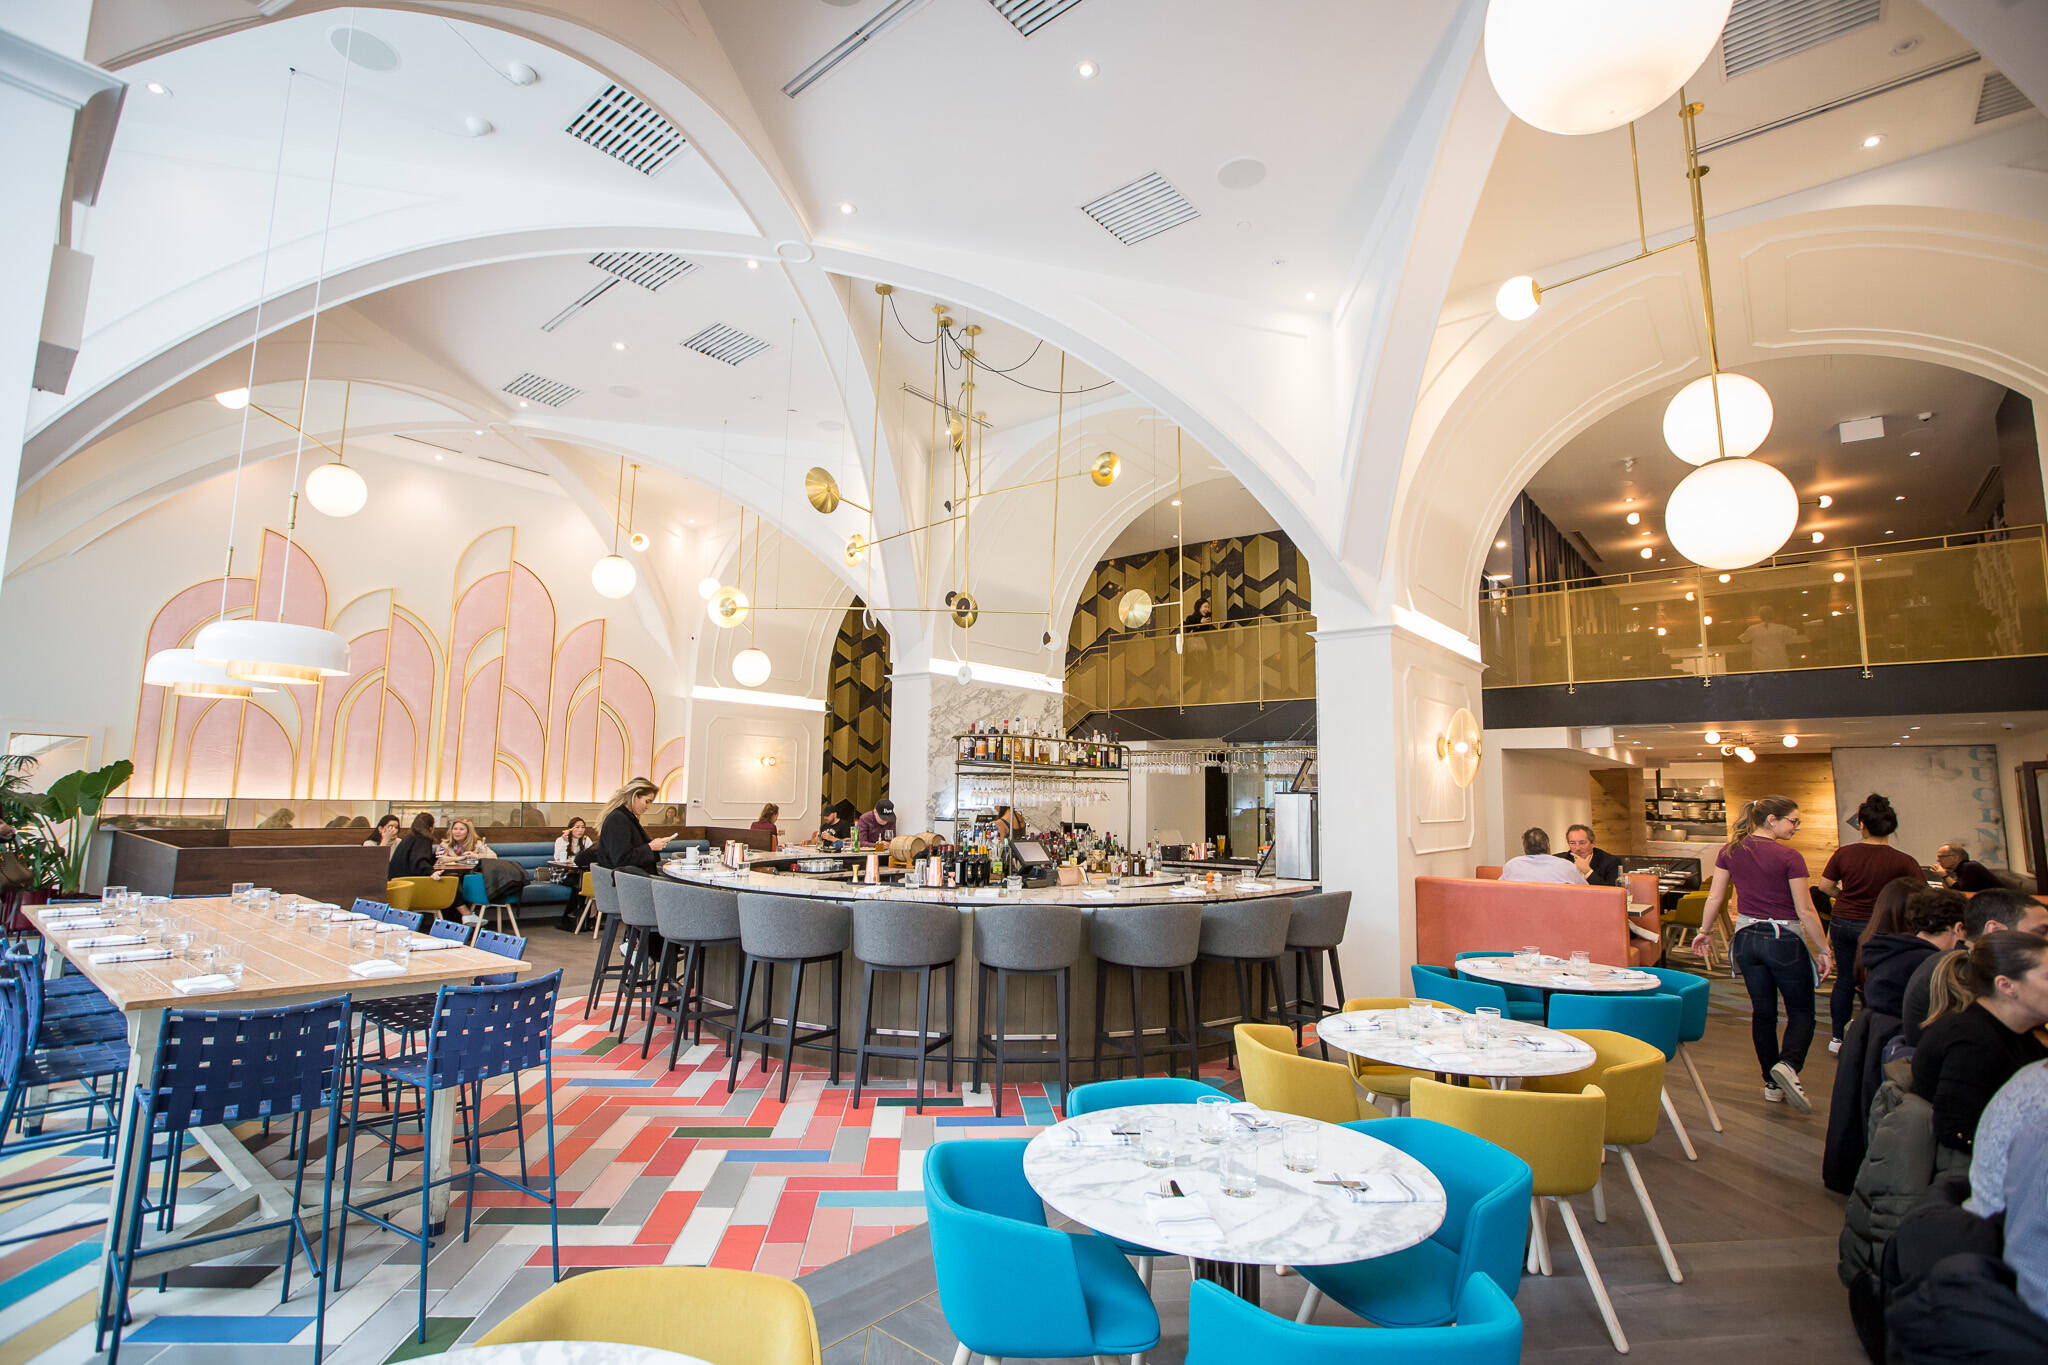 10 new restaurants with beautiful interior design in Toronto